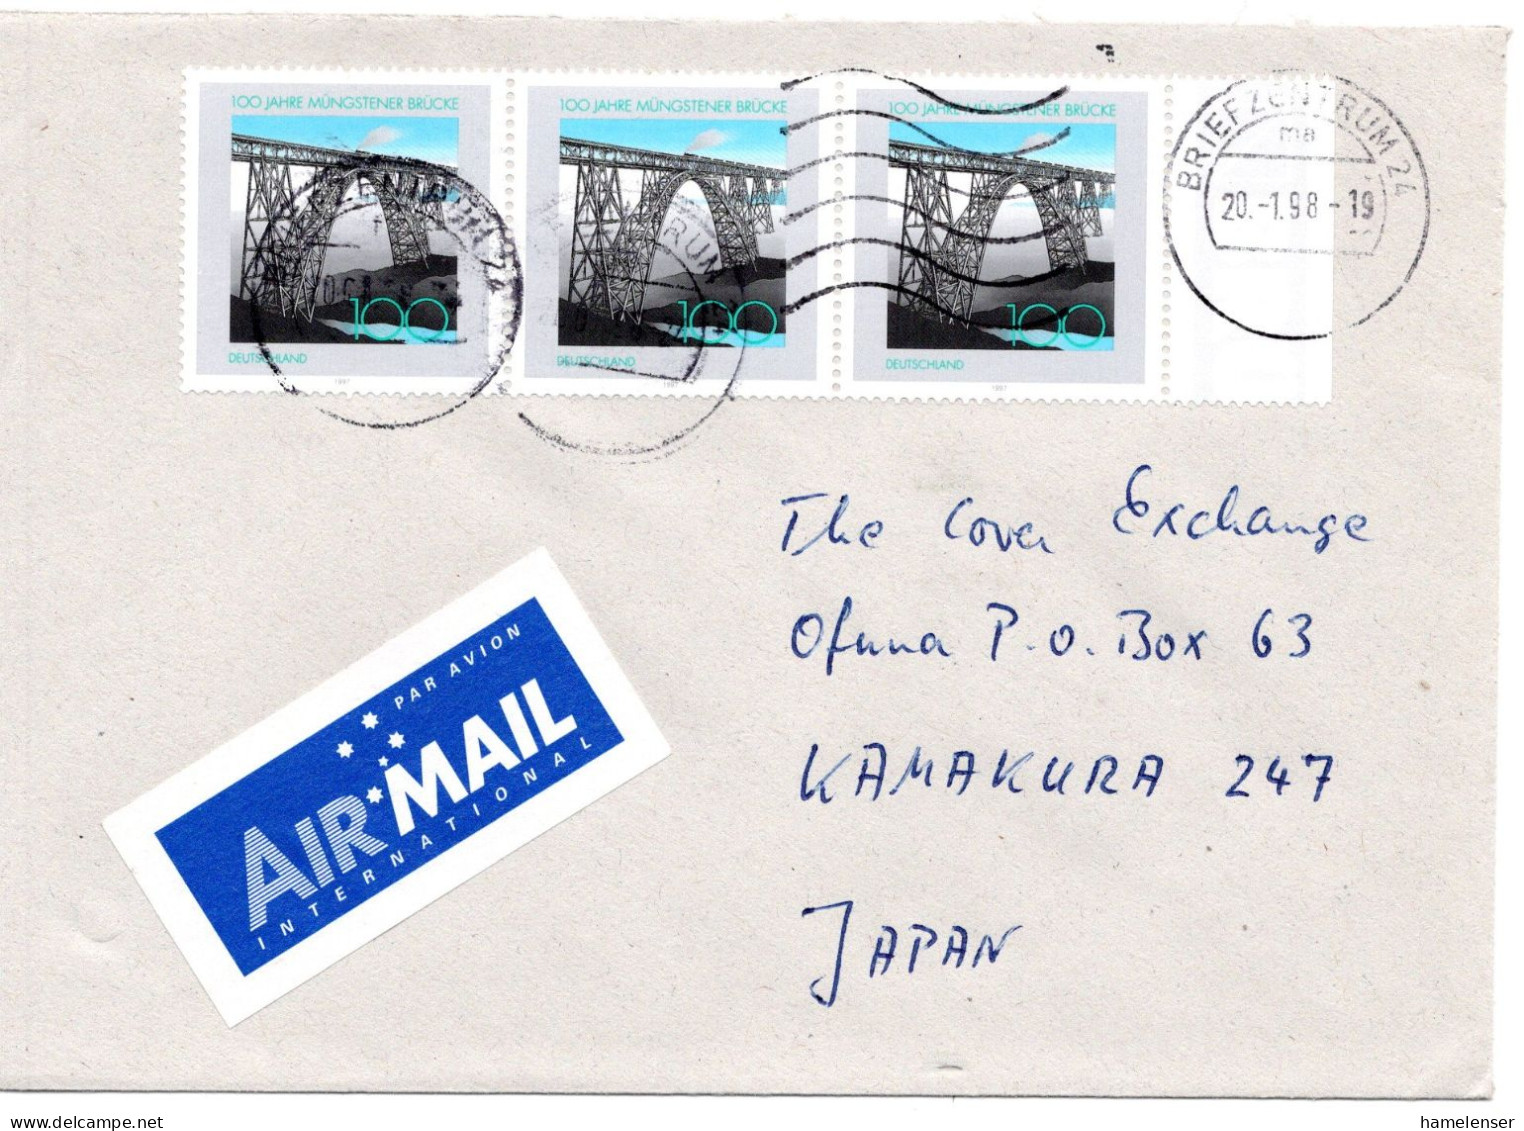 66278 - Bund - 1998 - 3@100Pfg Muengstener Bruecke A LpBf BRIEFZENTRUM 24 -> Japan - Covers & Documents